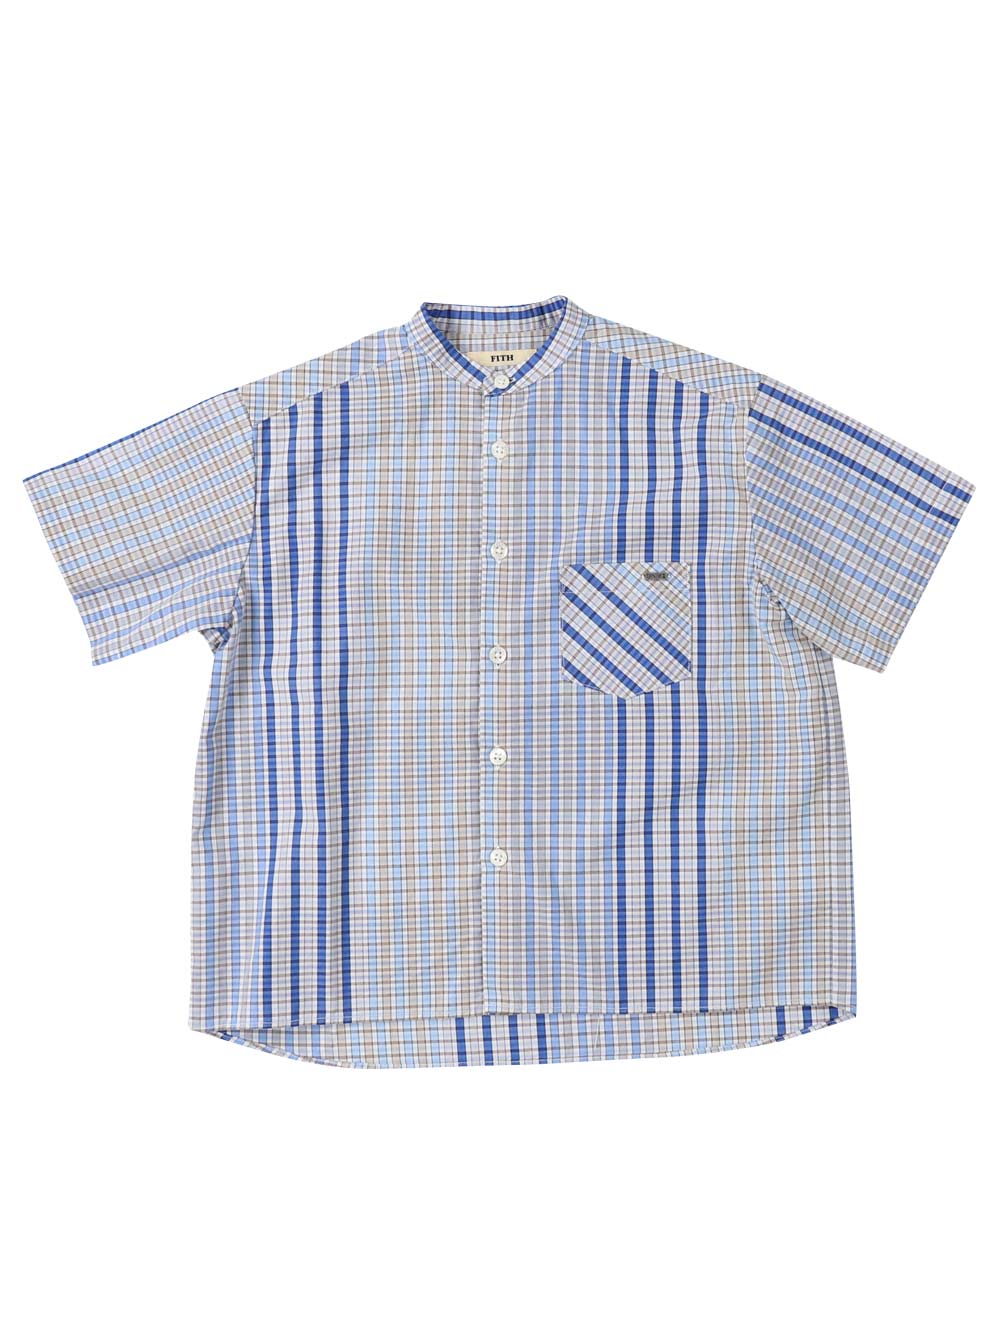 Blue White Striped Shirt